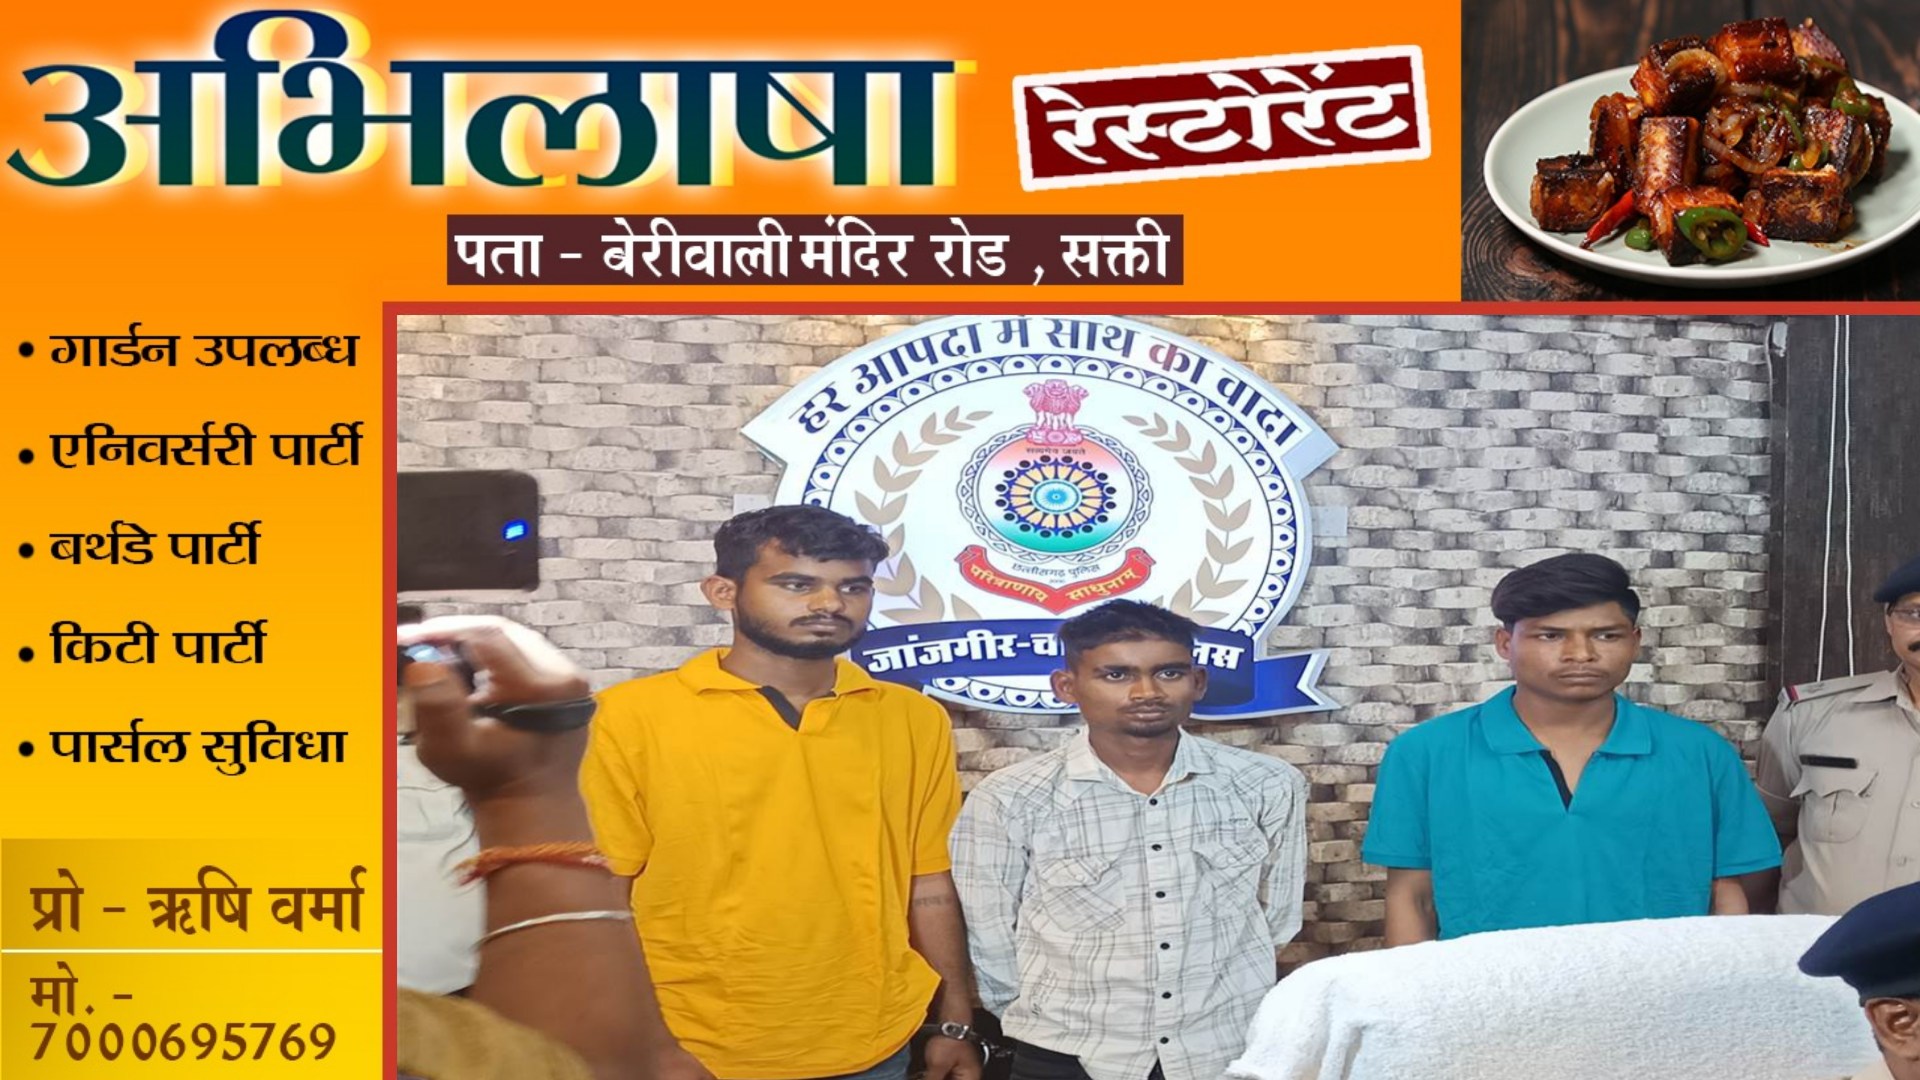 जांजगीर चाम्पा जिले में गहरी और खतरनाक शाजिश हुई नाकाम , एक नाबालिग सहित 04 आरोपी गिरफ्तार